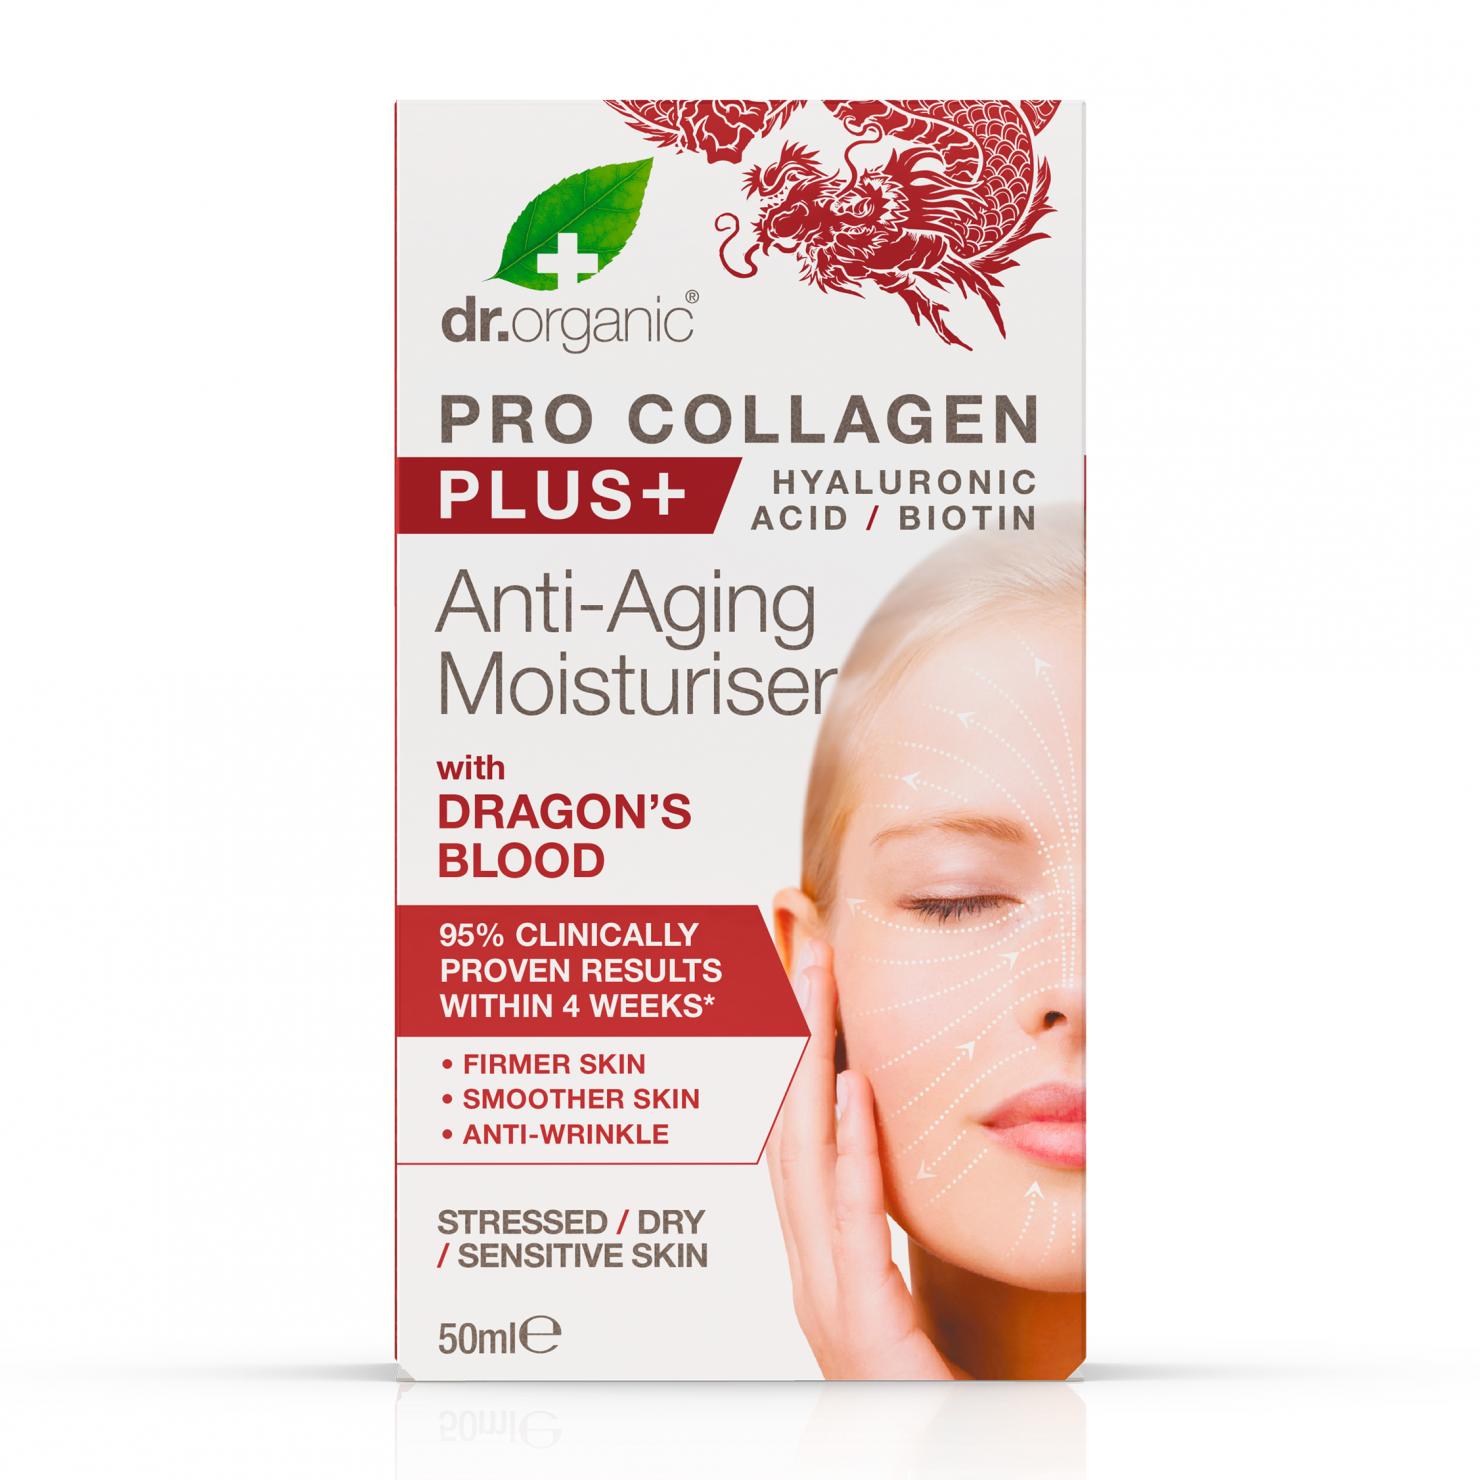 Pro Collagen Plus+ Anti-Aging Moisturiser with Dragon's Blood 50ml